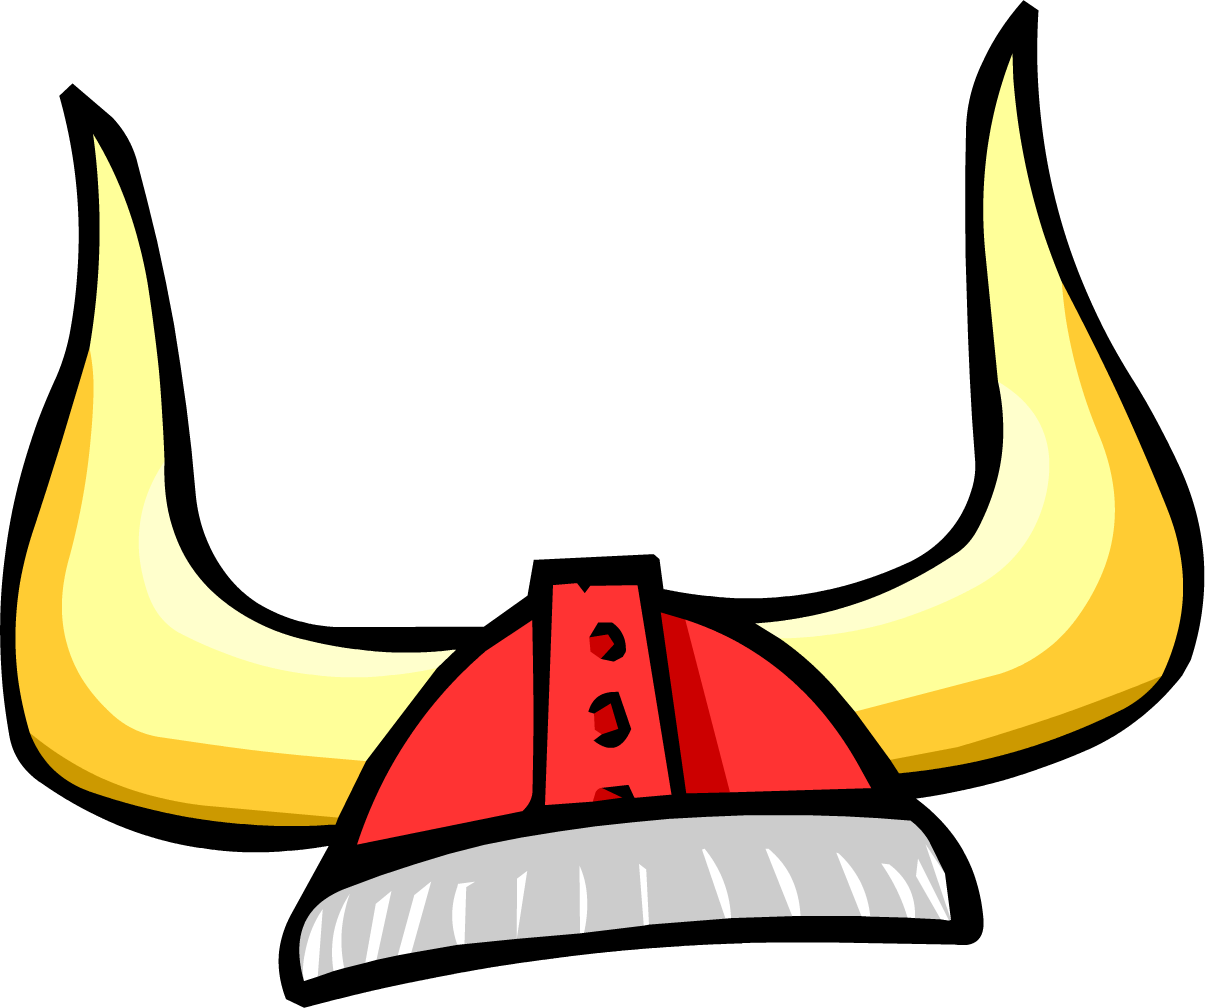 Free Viking Hat Png, Download Free Clip Art, Free Clip Art.